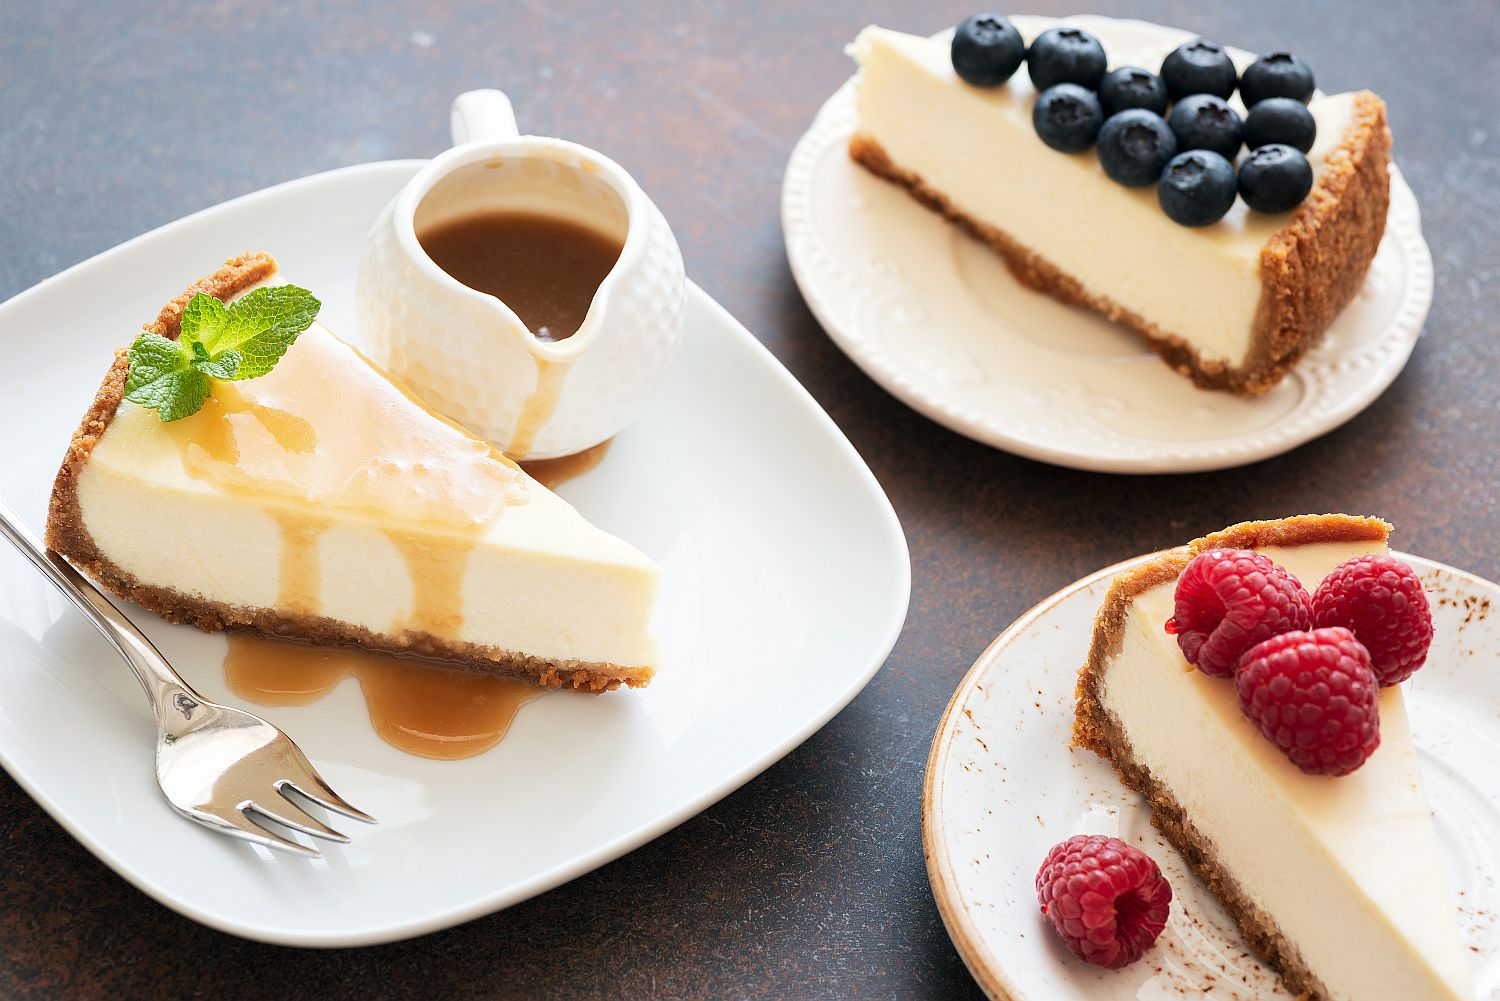 sugar-free cheesecake - a keto sweet treat